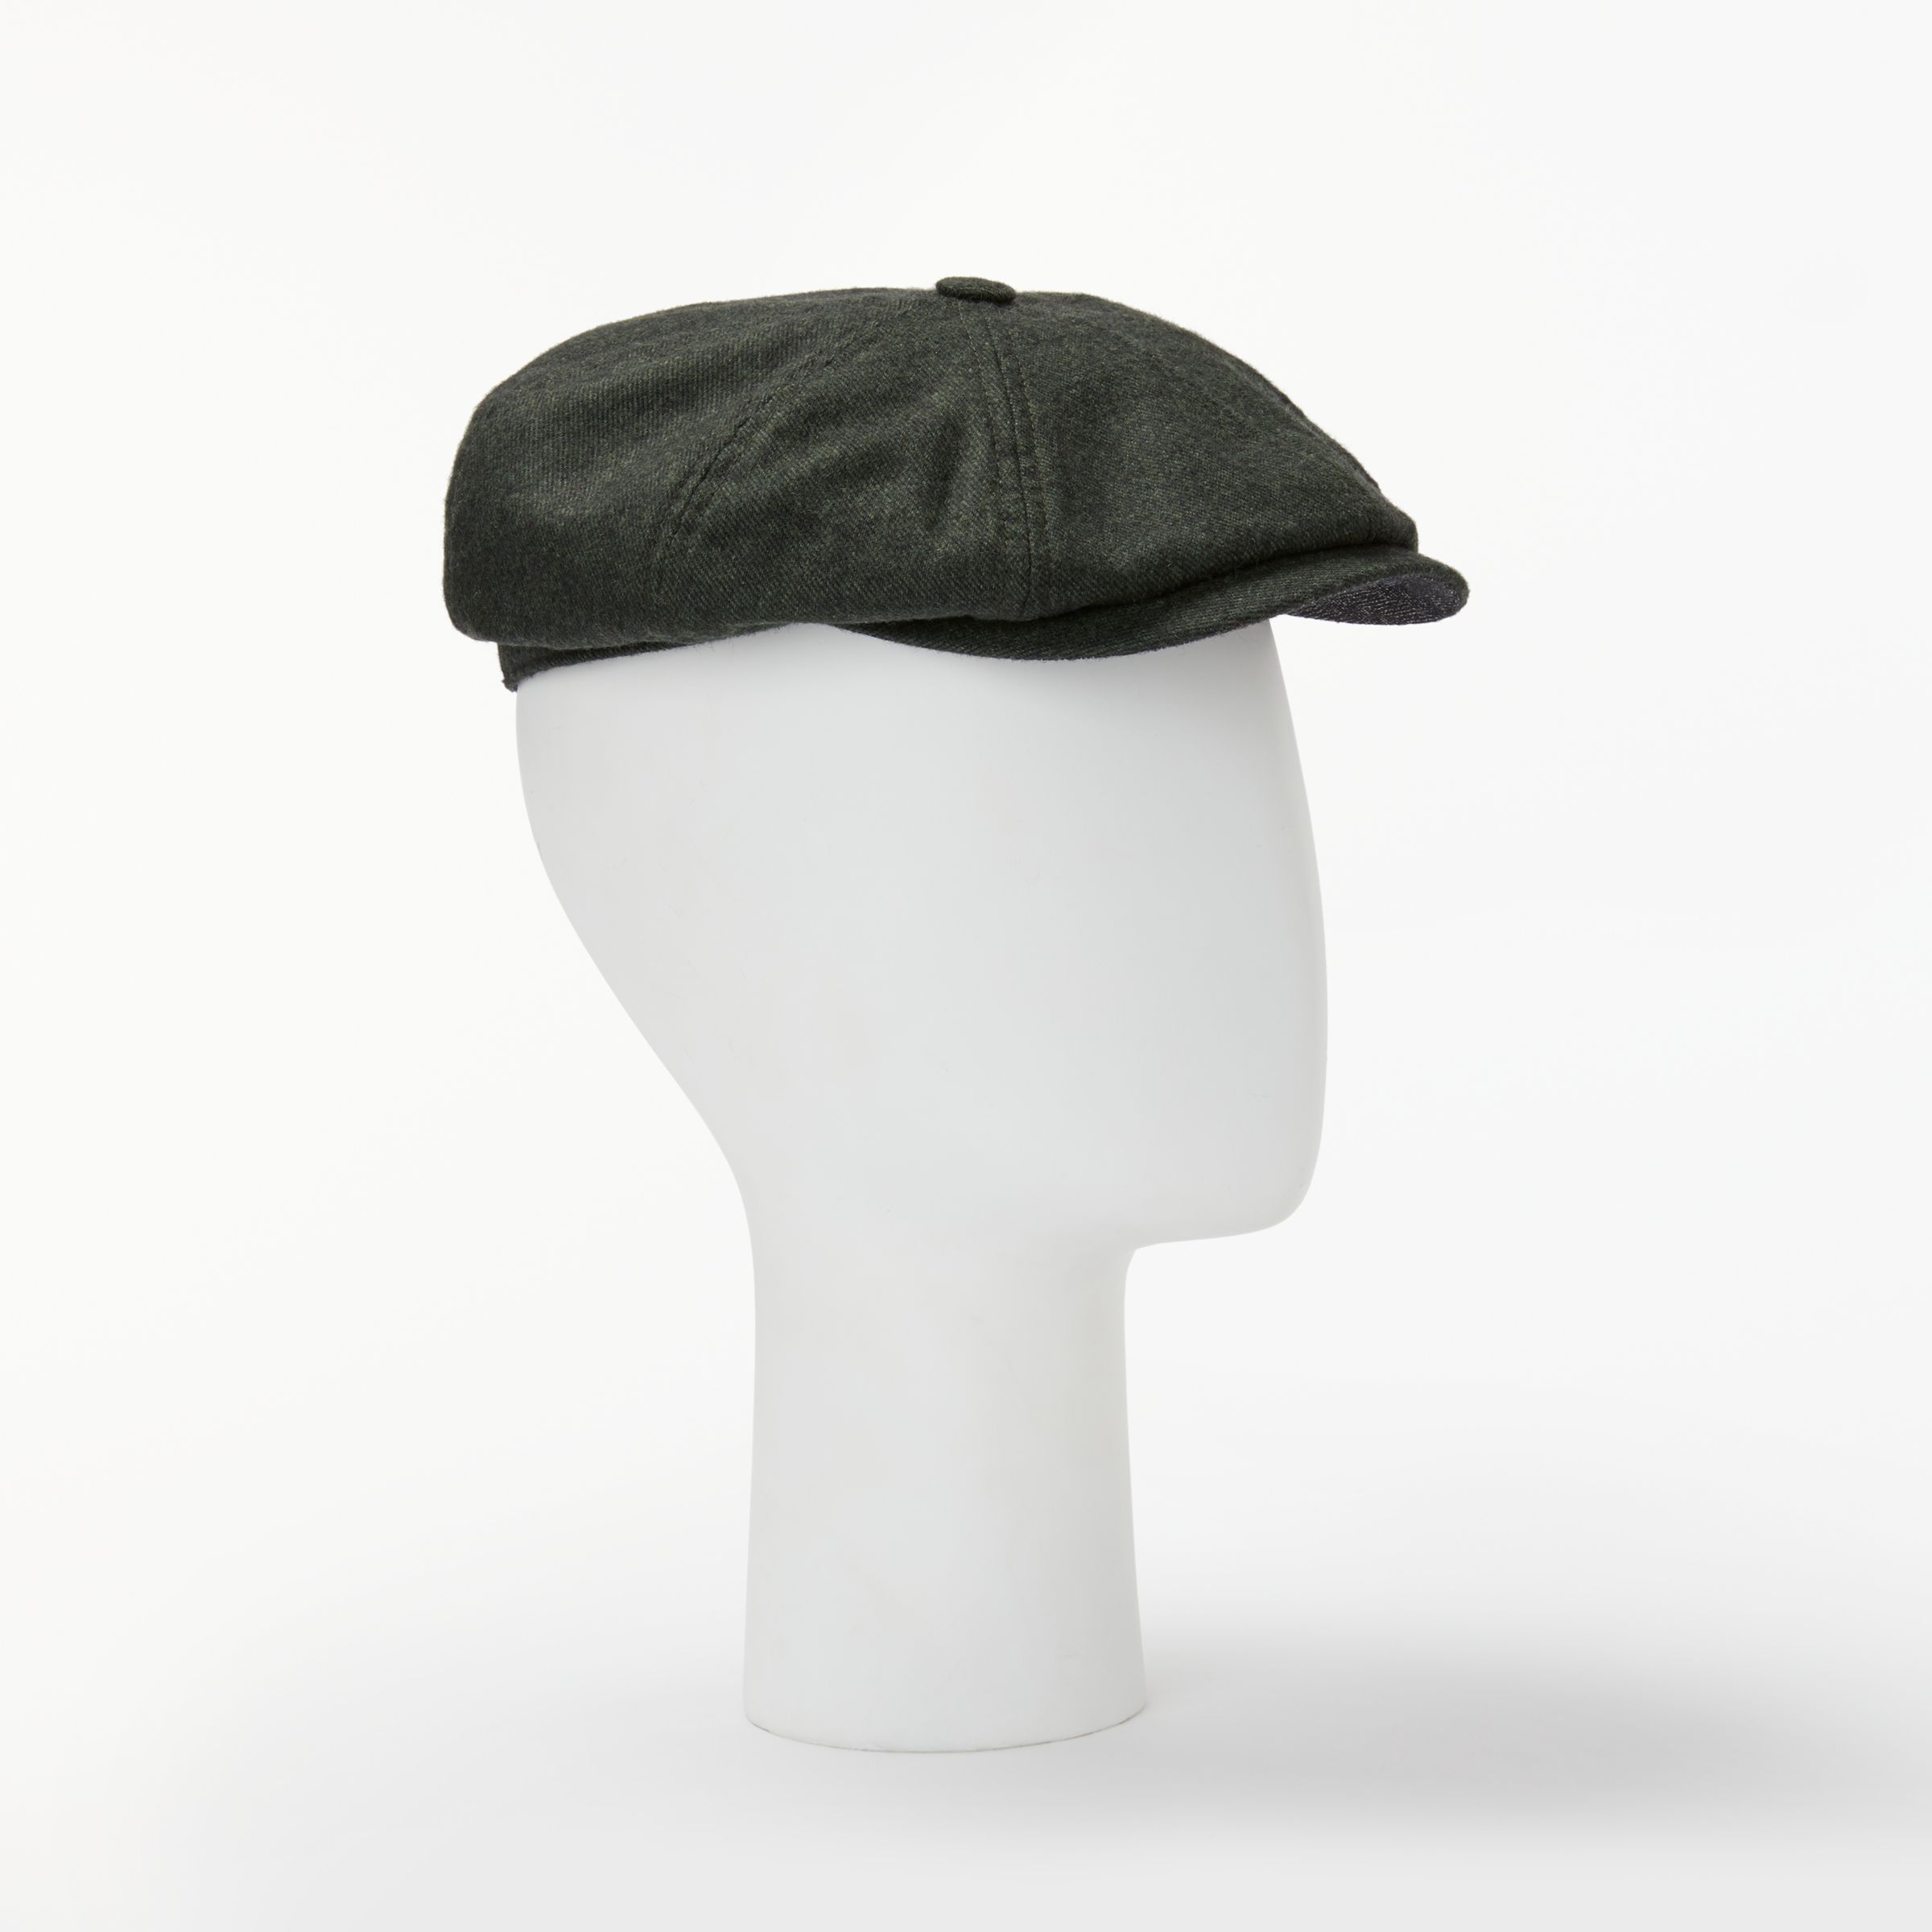 Ted Baker Baker Boy Hat, Green